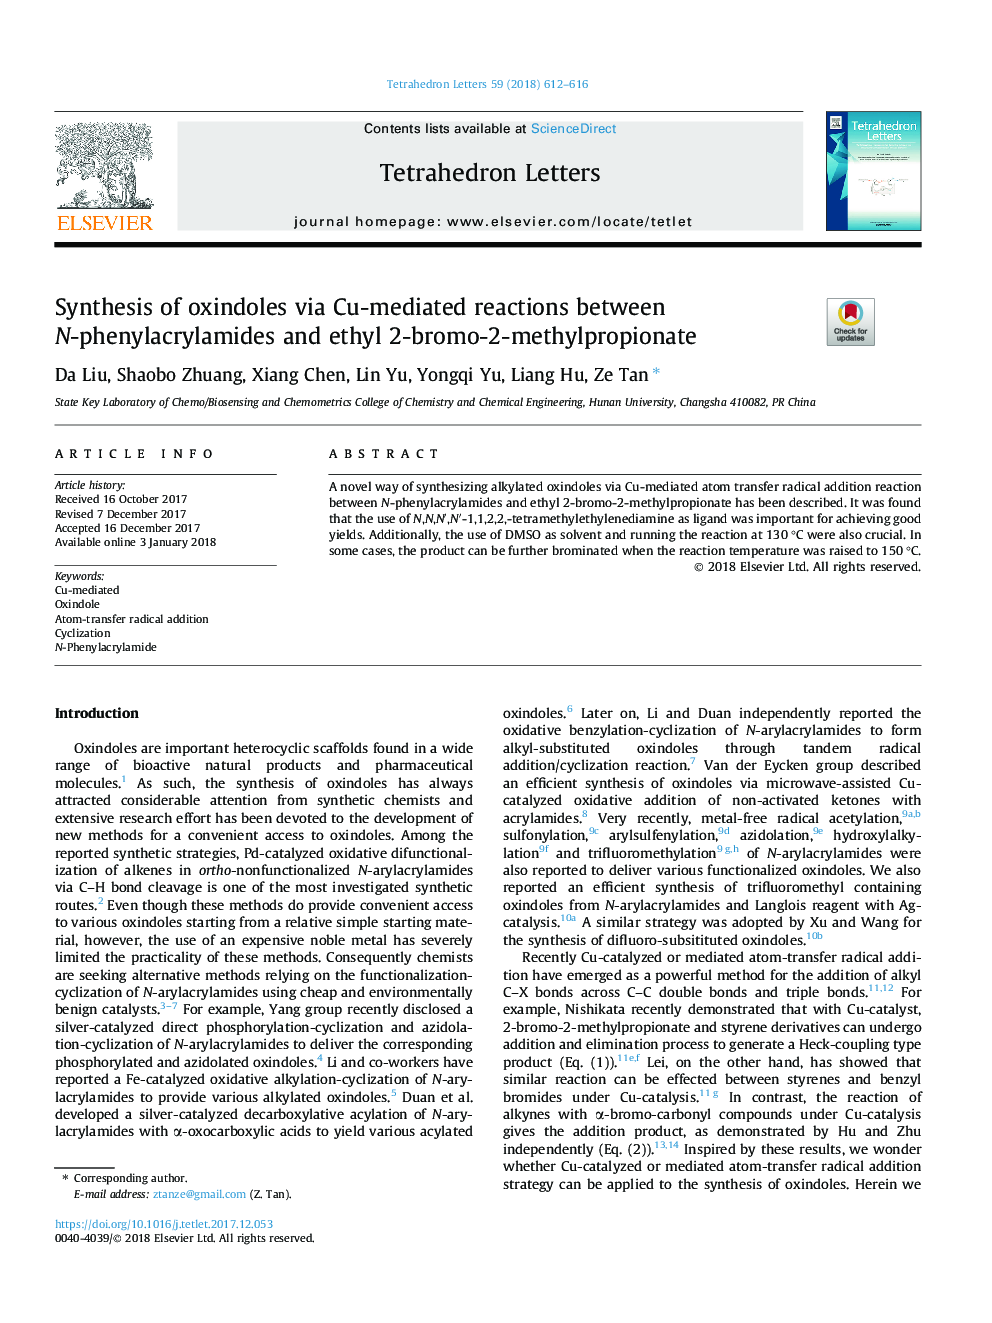 Synthesis of oxindoles via Cu-mediated reactions between N-phenylacrylamides and ethyl 2-bromo-2-methylpropionate